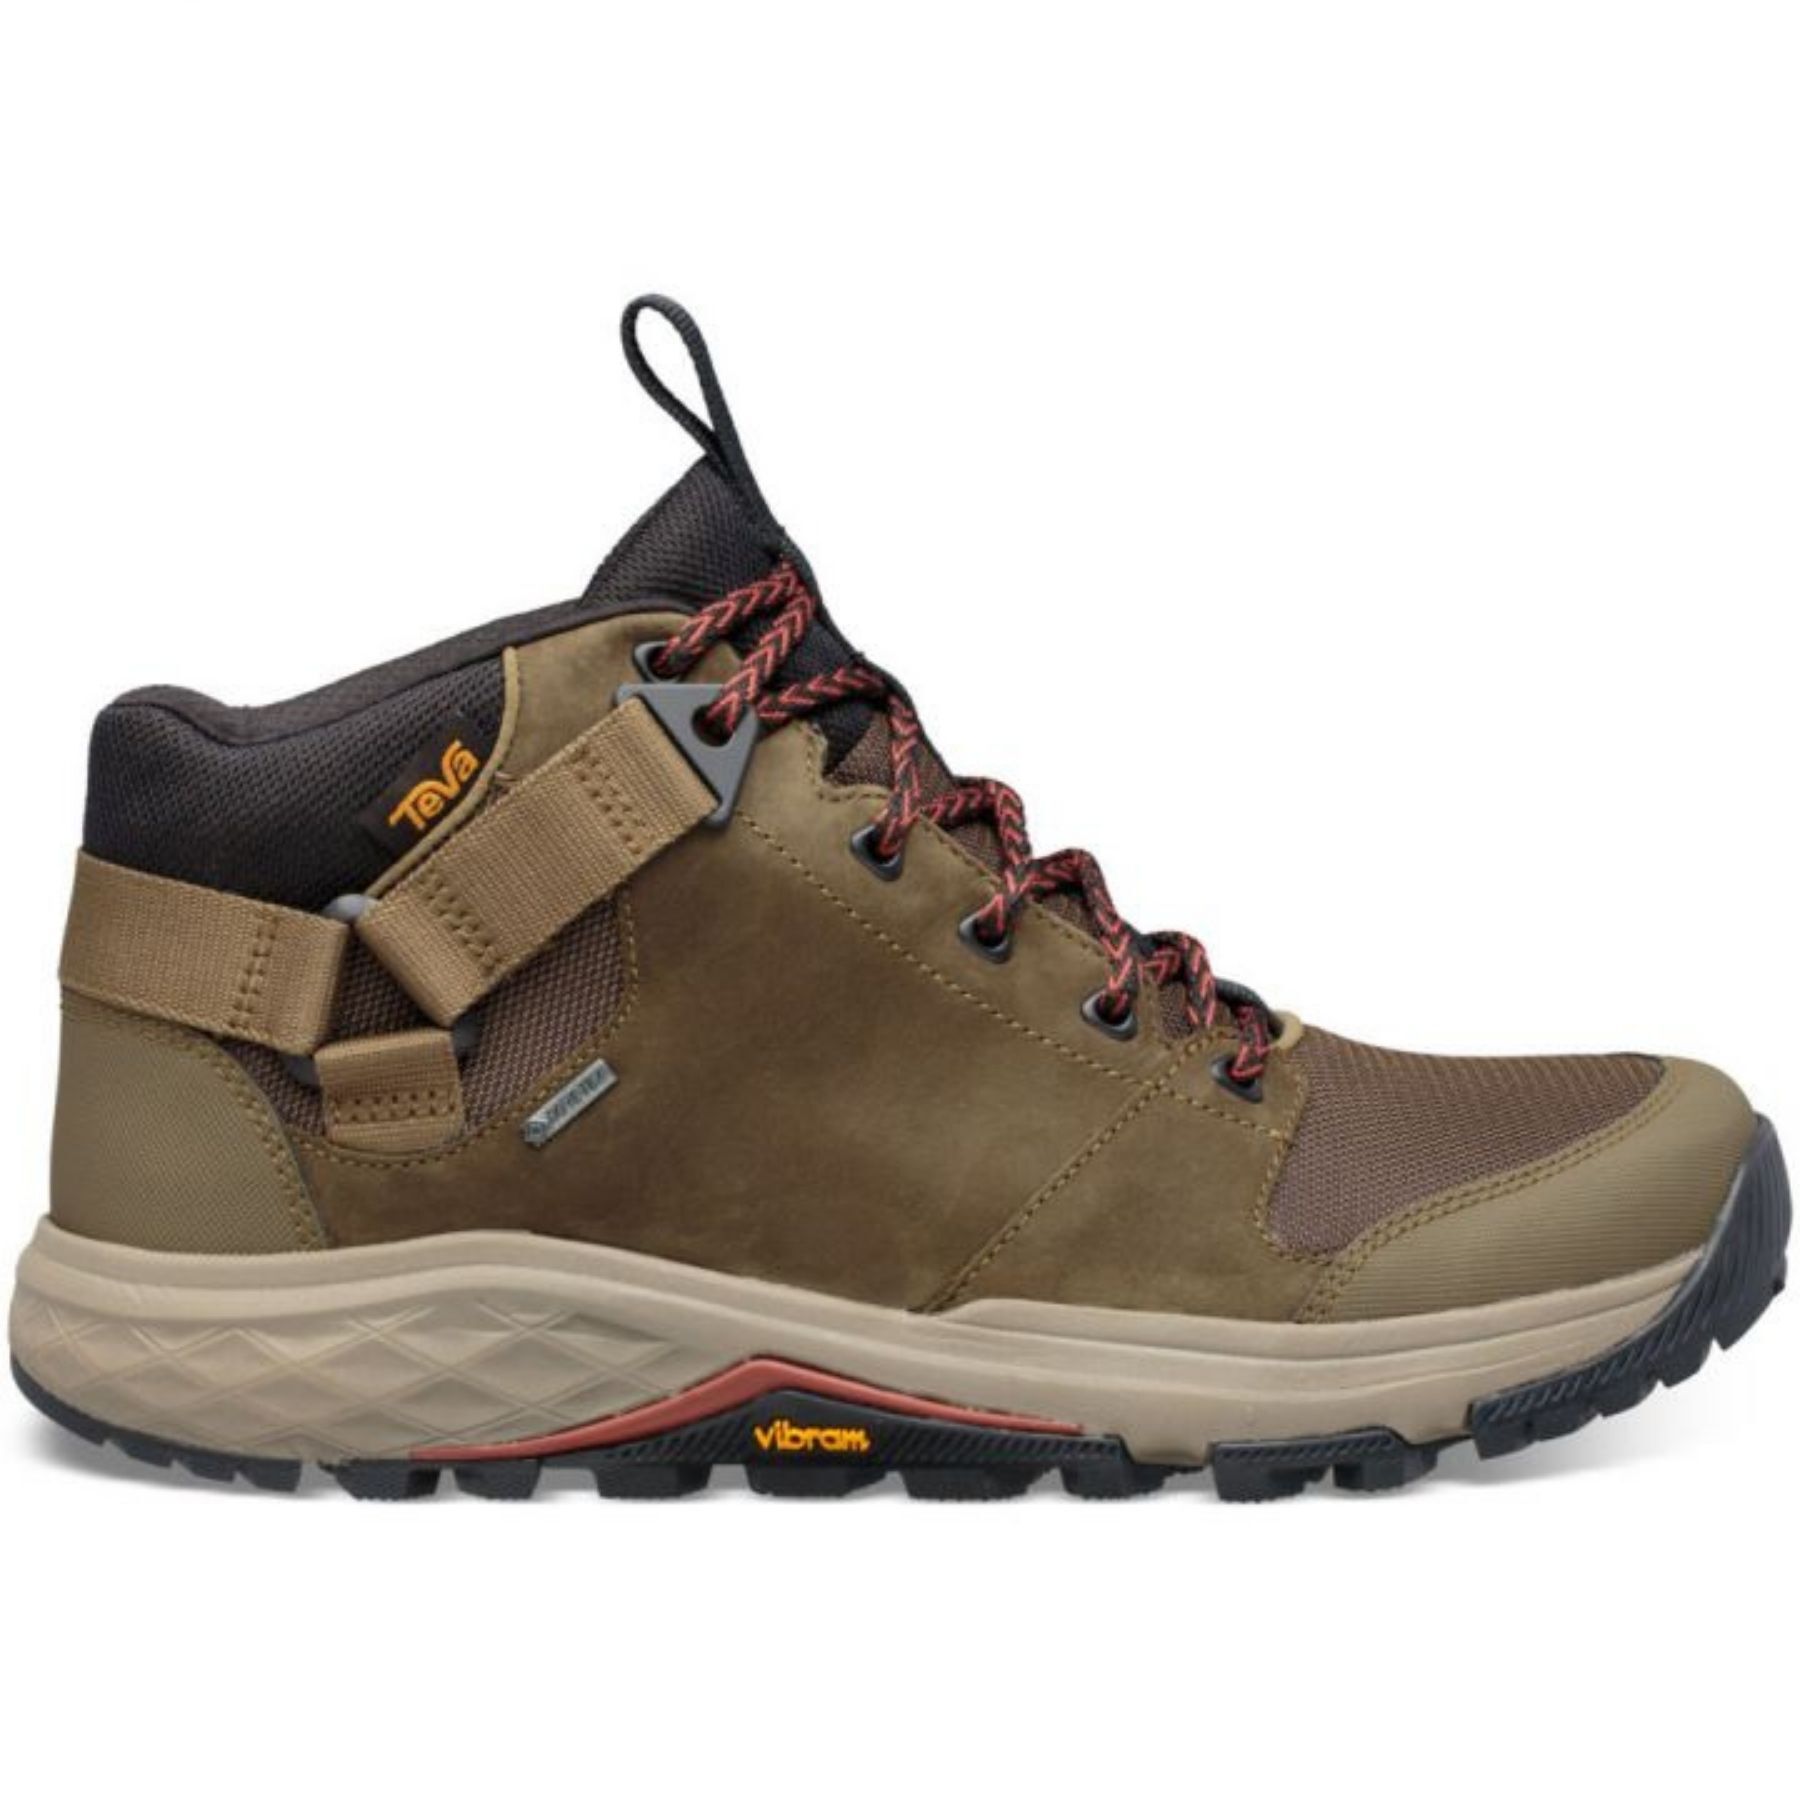 Teva Grandview GTX - Hiking boots - Men's